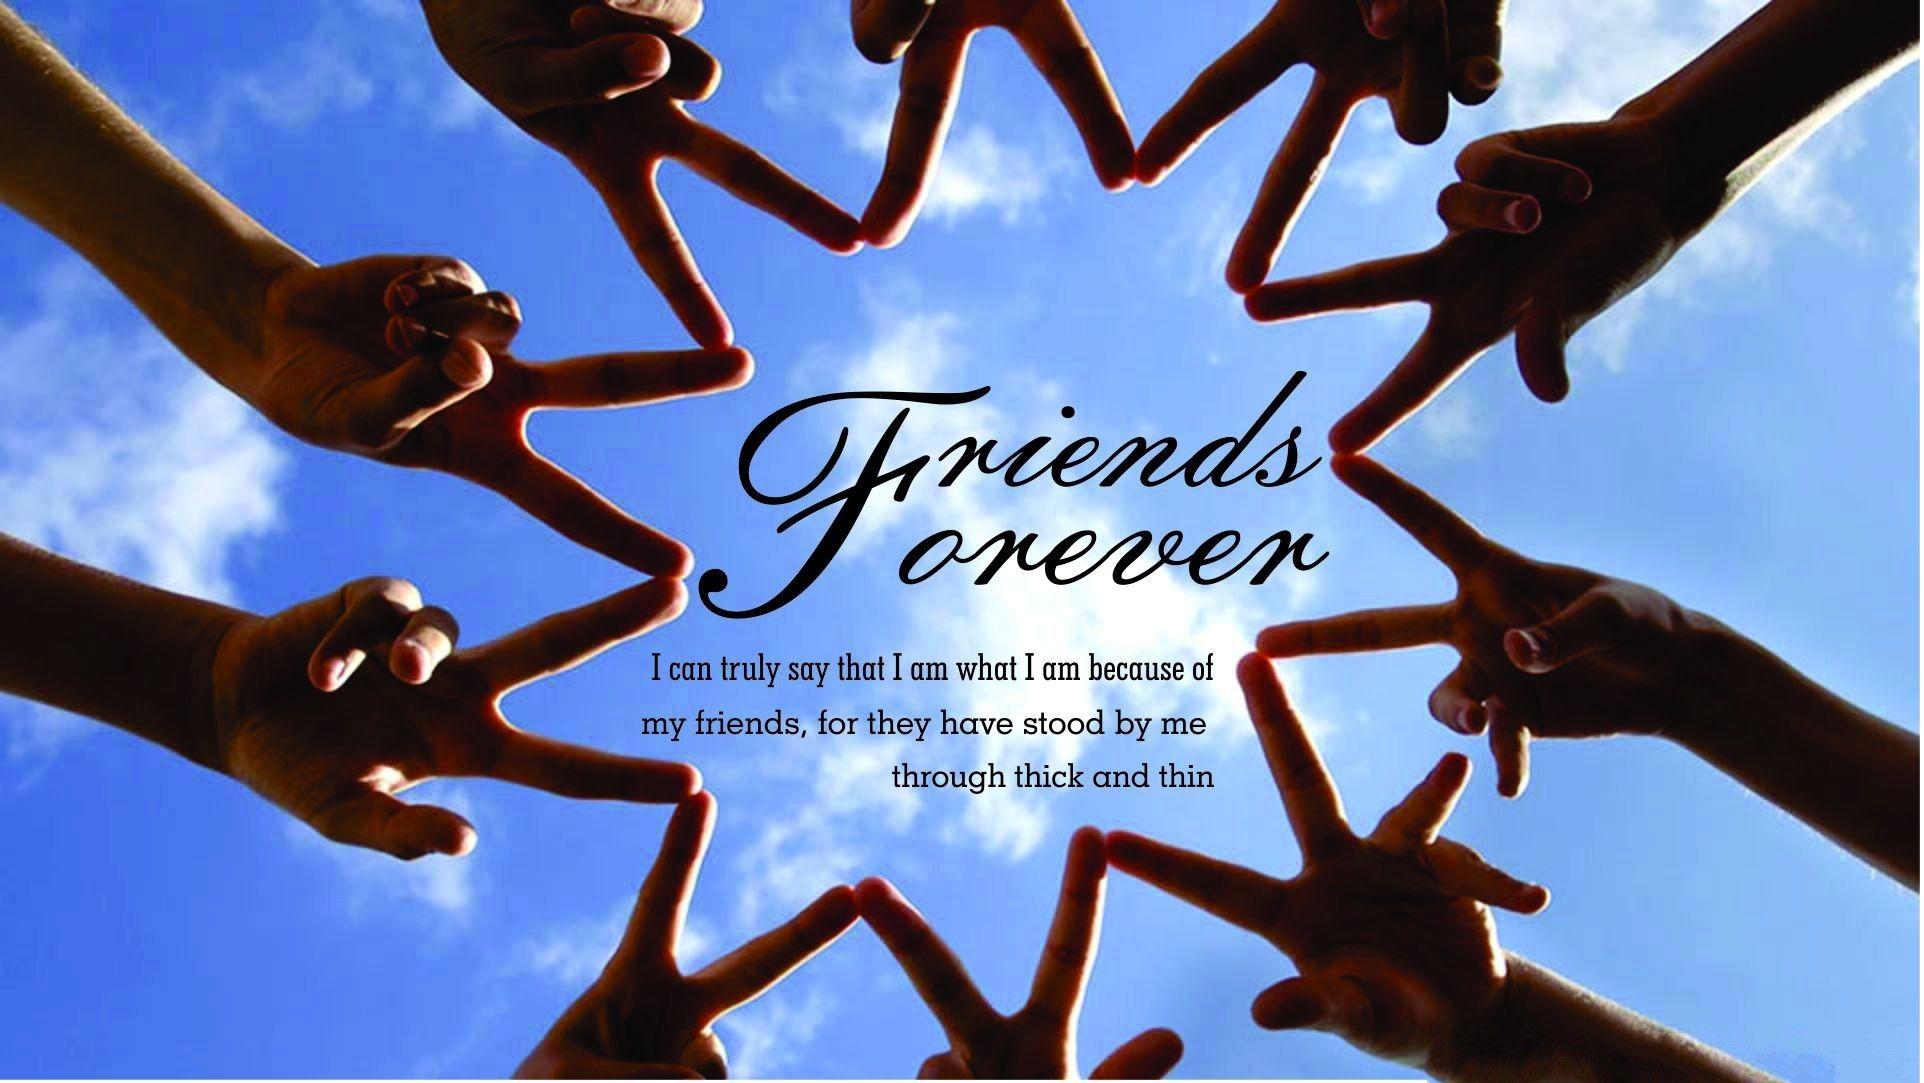 Best Friends Forever Wallpaper HD